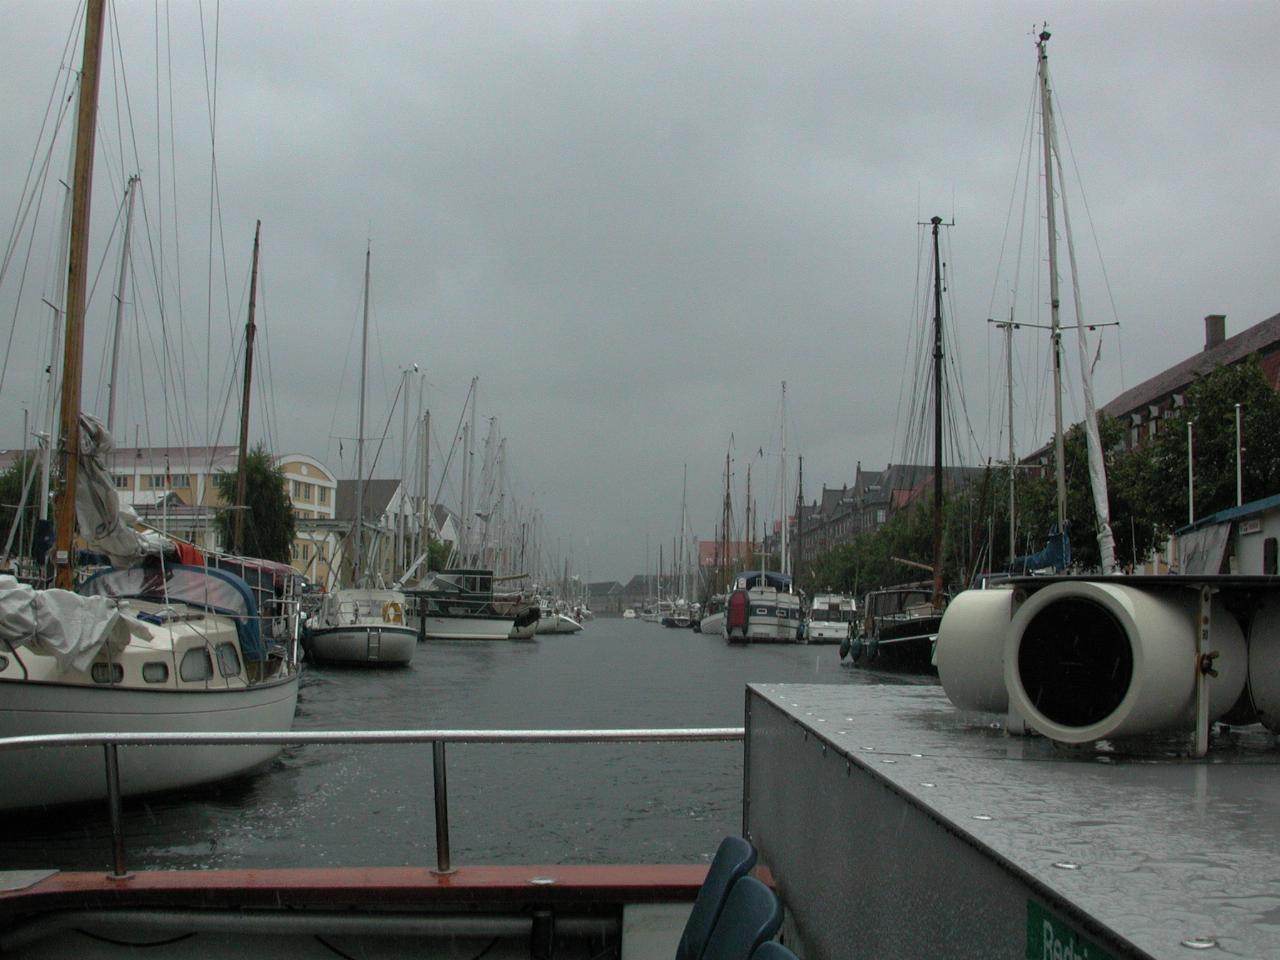 KPLU Viking Jazz: View along Christianhaven Canal